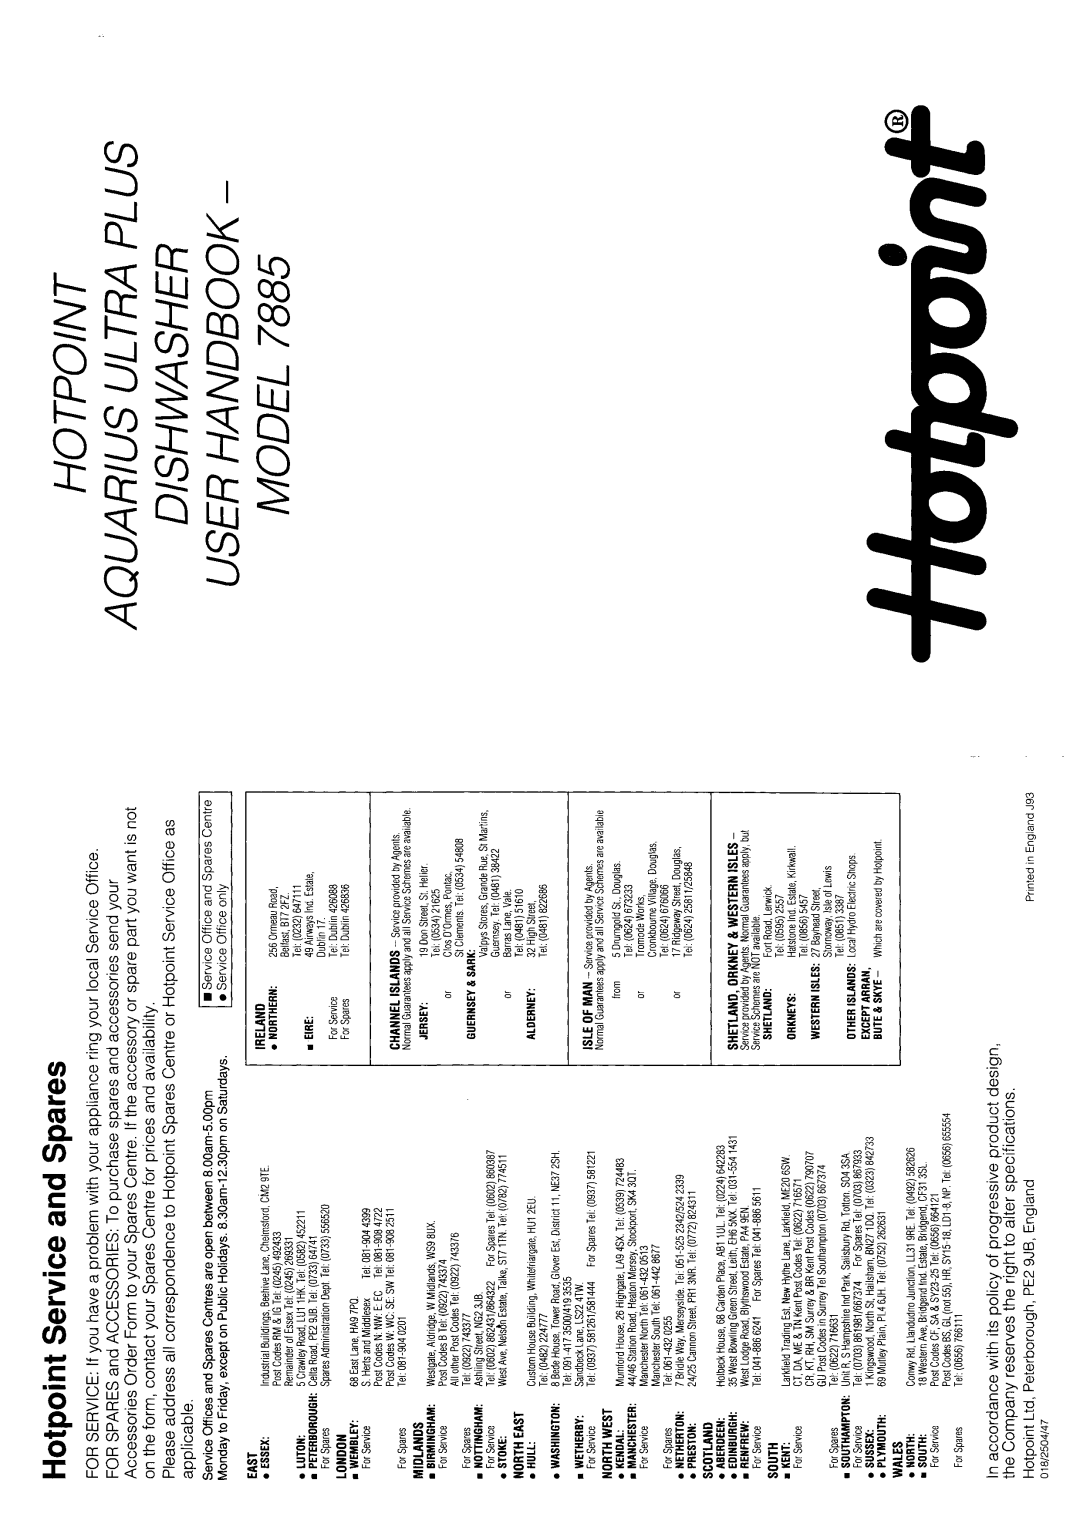 Hotpoint 7885 manual 